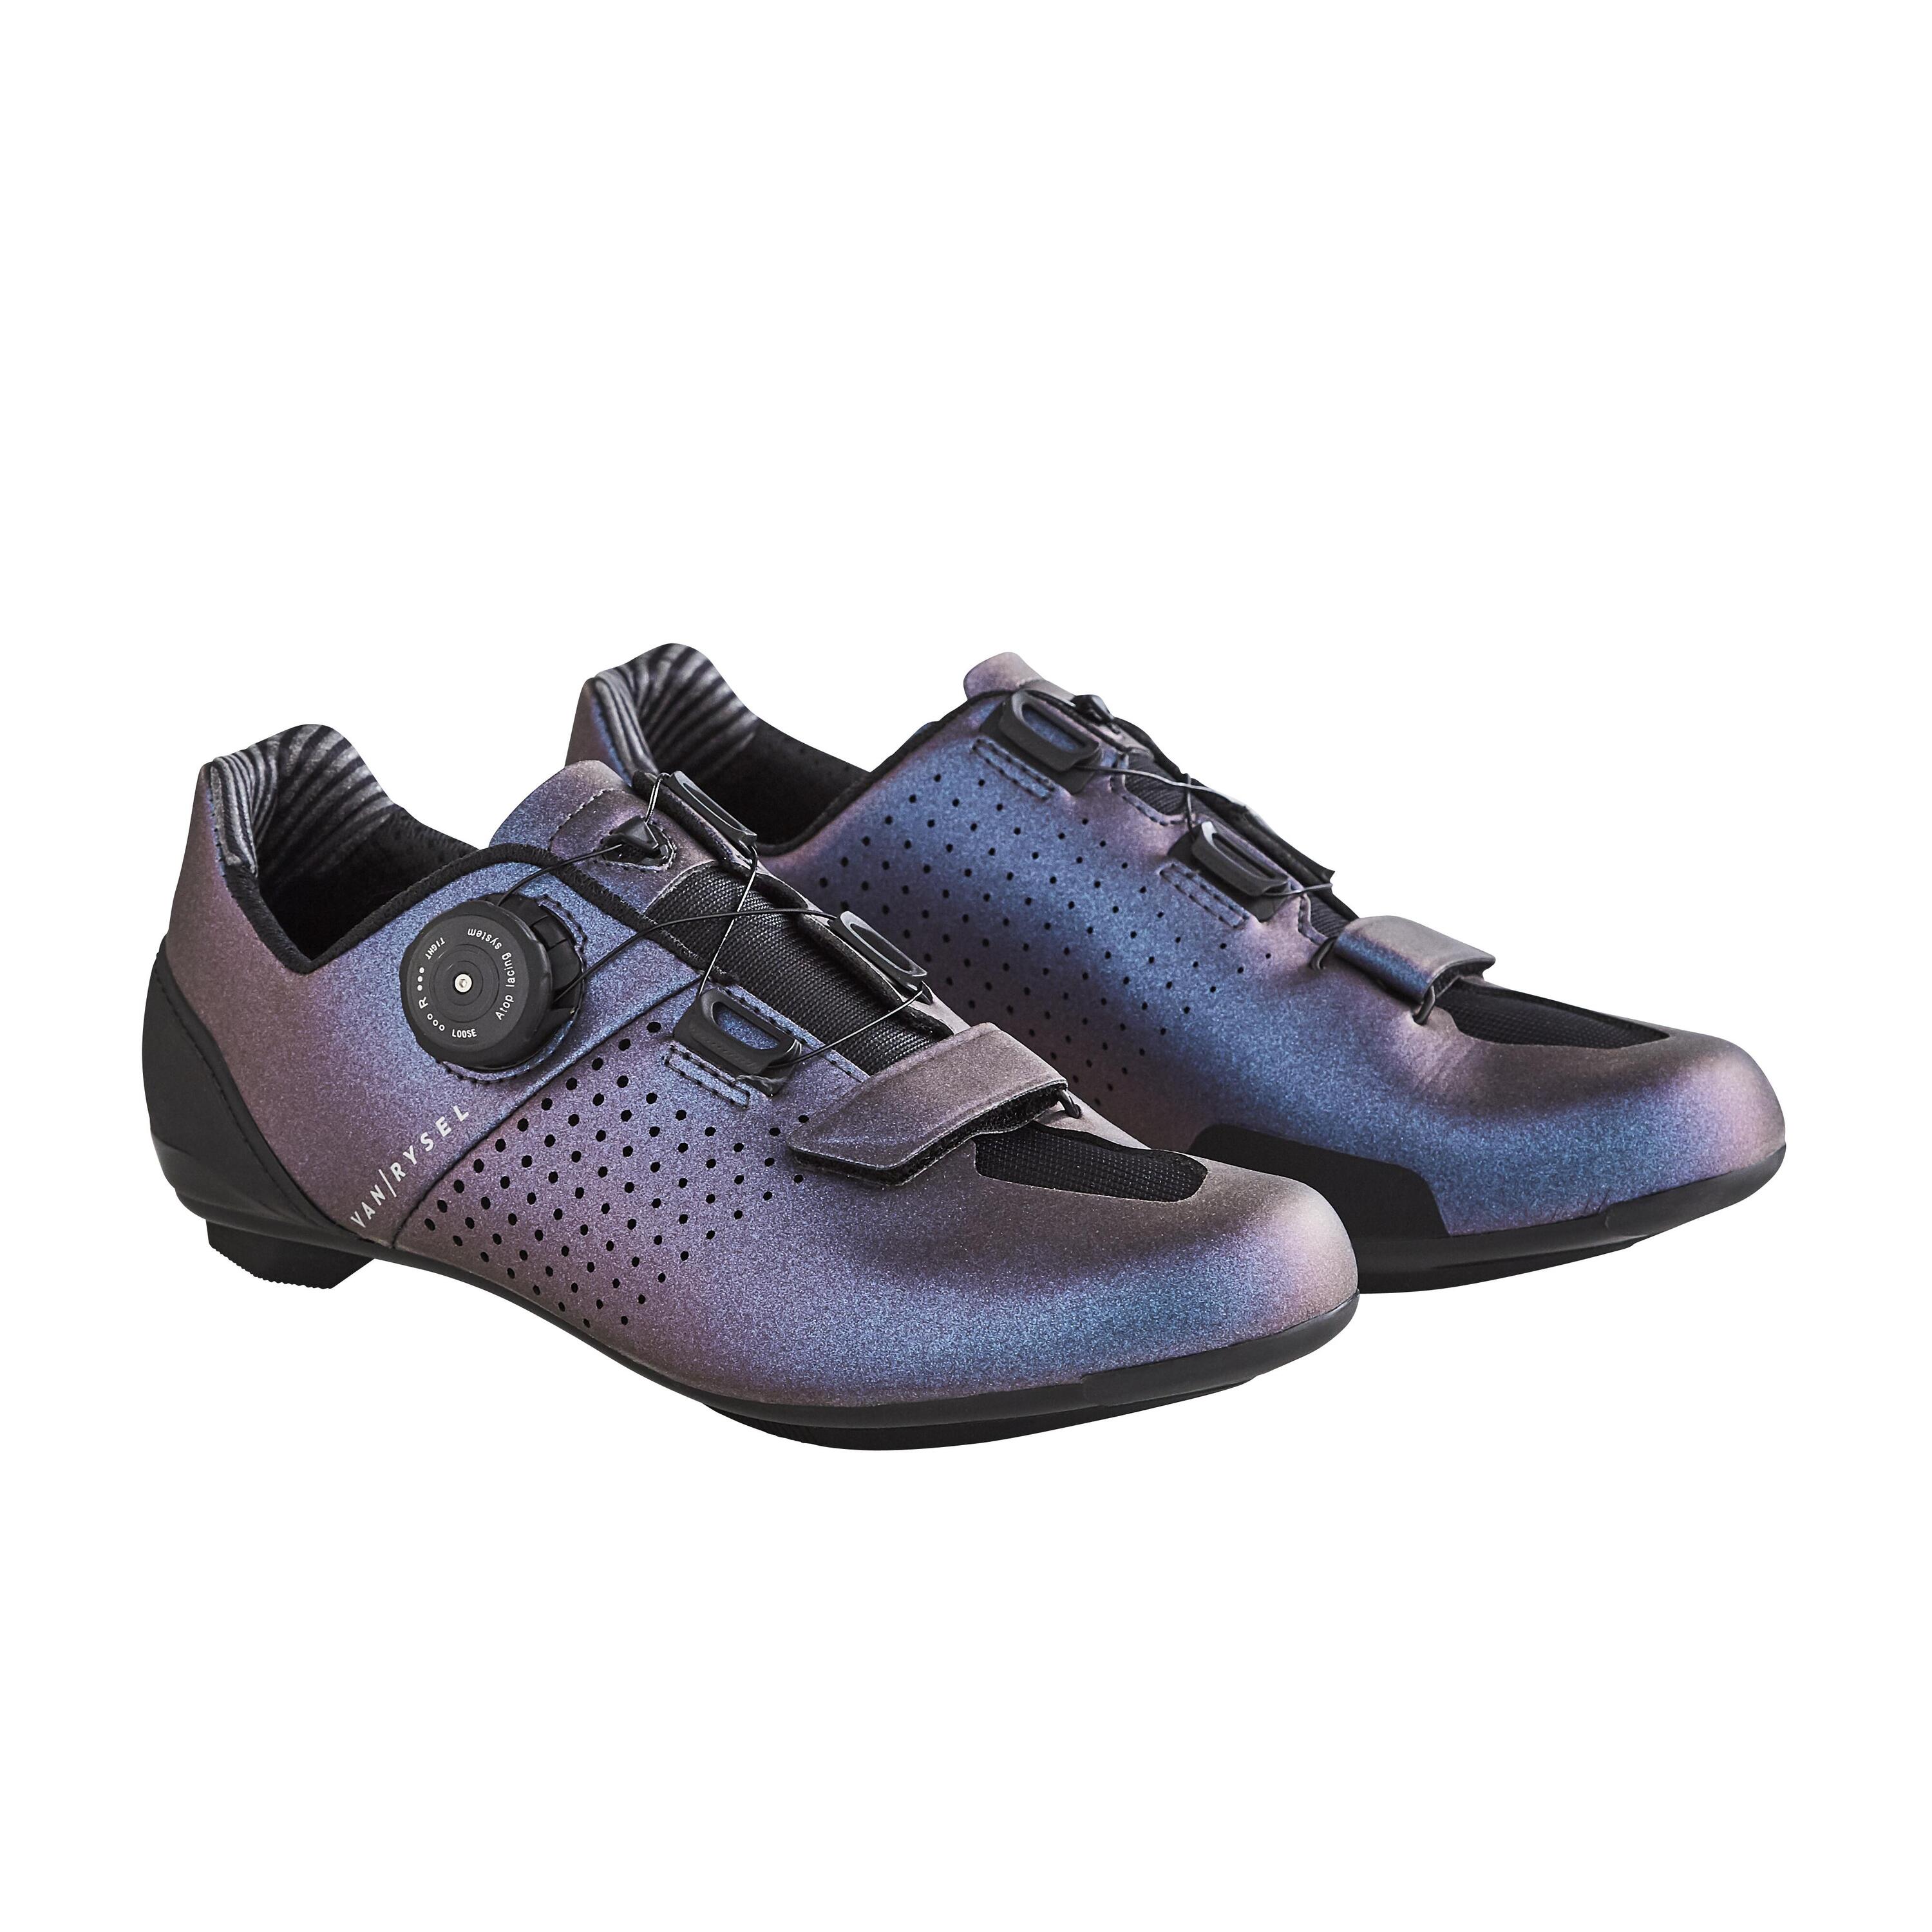 RoadR 520 Women's Carbon Road Cycling Shoes - Iridescent Purple 1/6